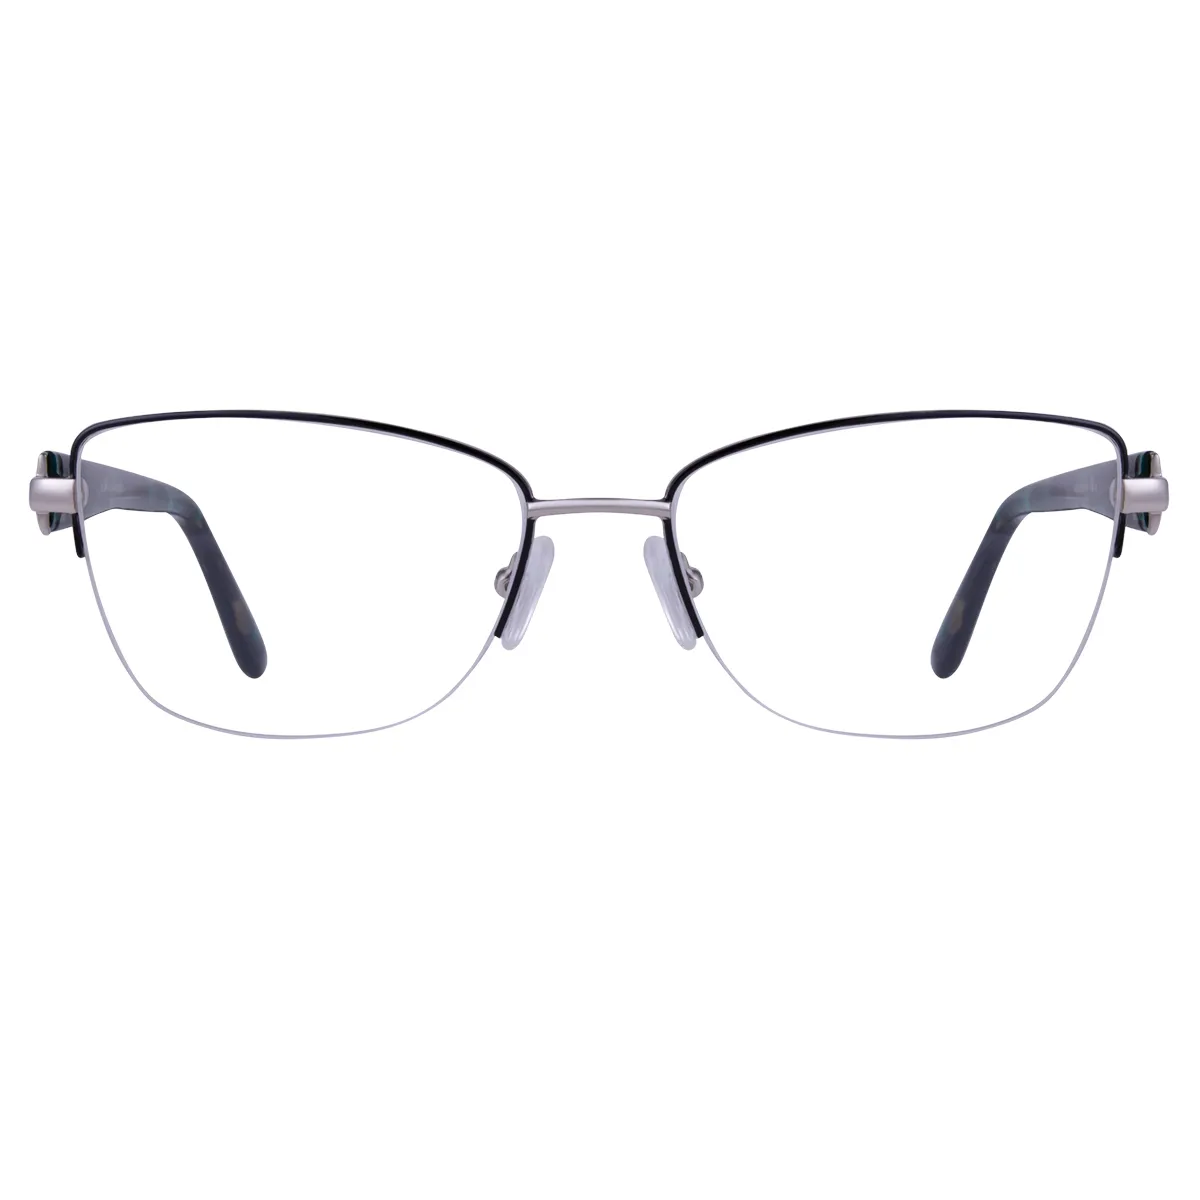 Coral - Square Silver Glasses for Women